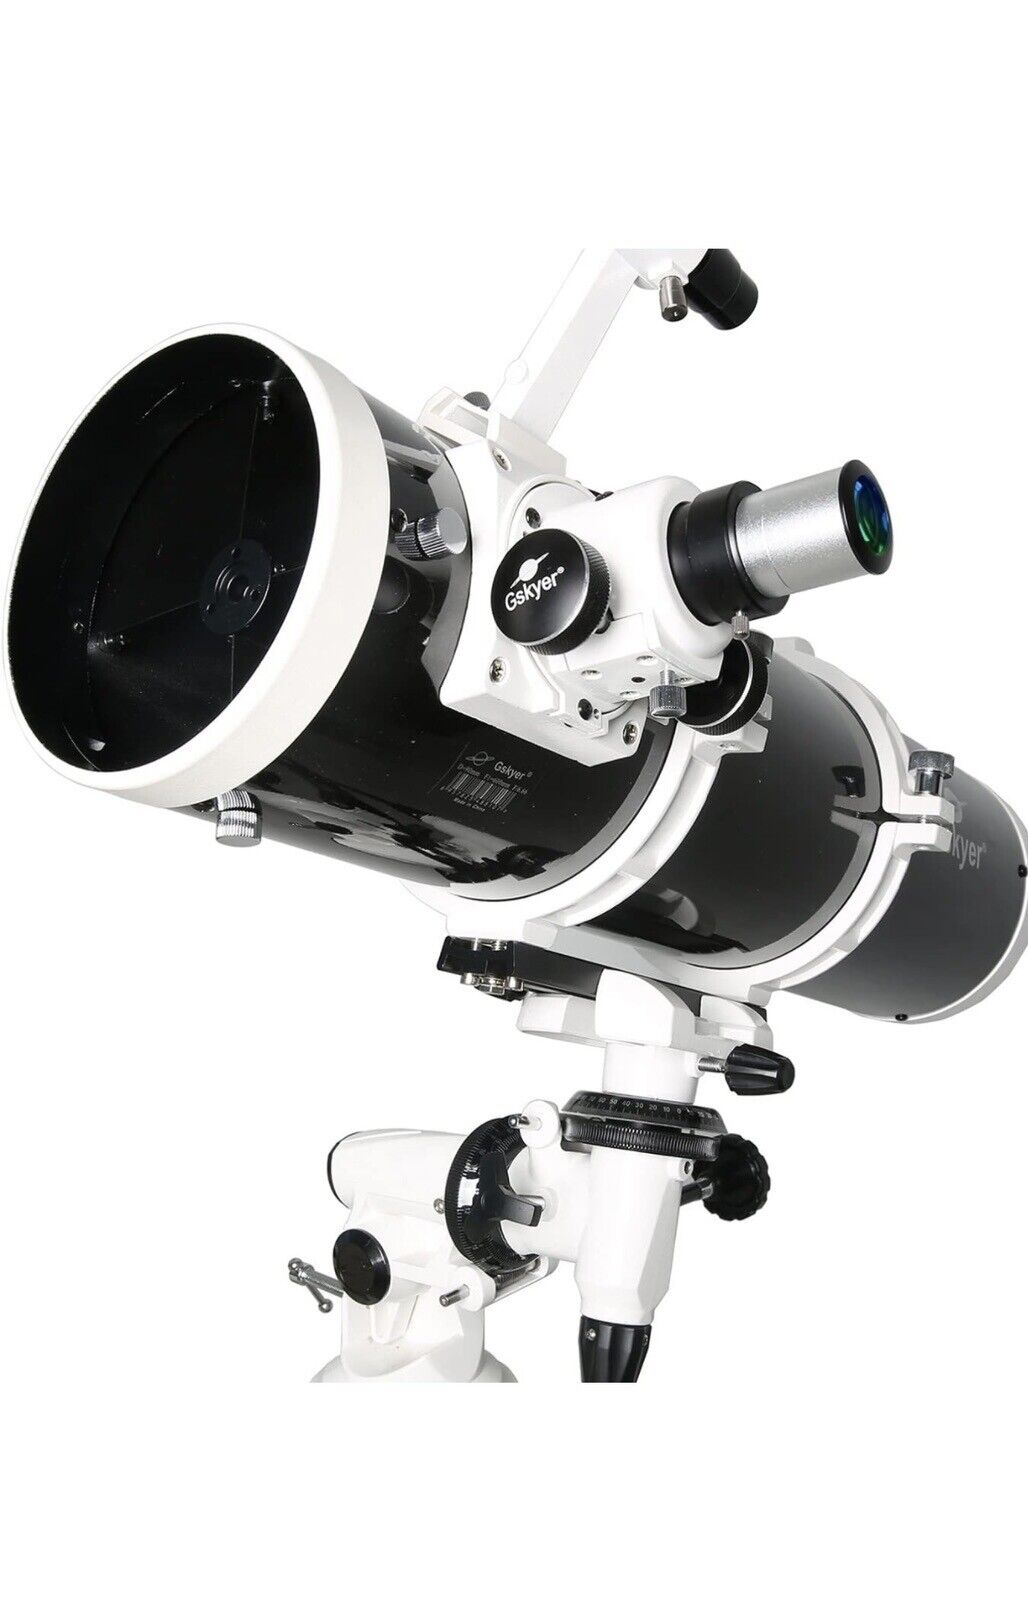 Telescopes, Gskyer 130EQ Professional Astronomical Telescope, Germany Tech Scope